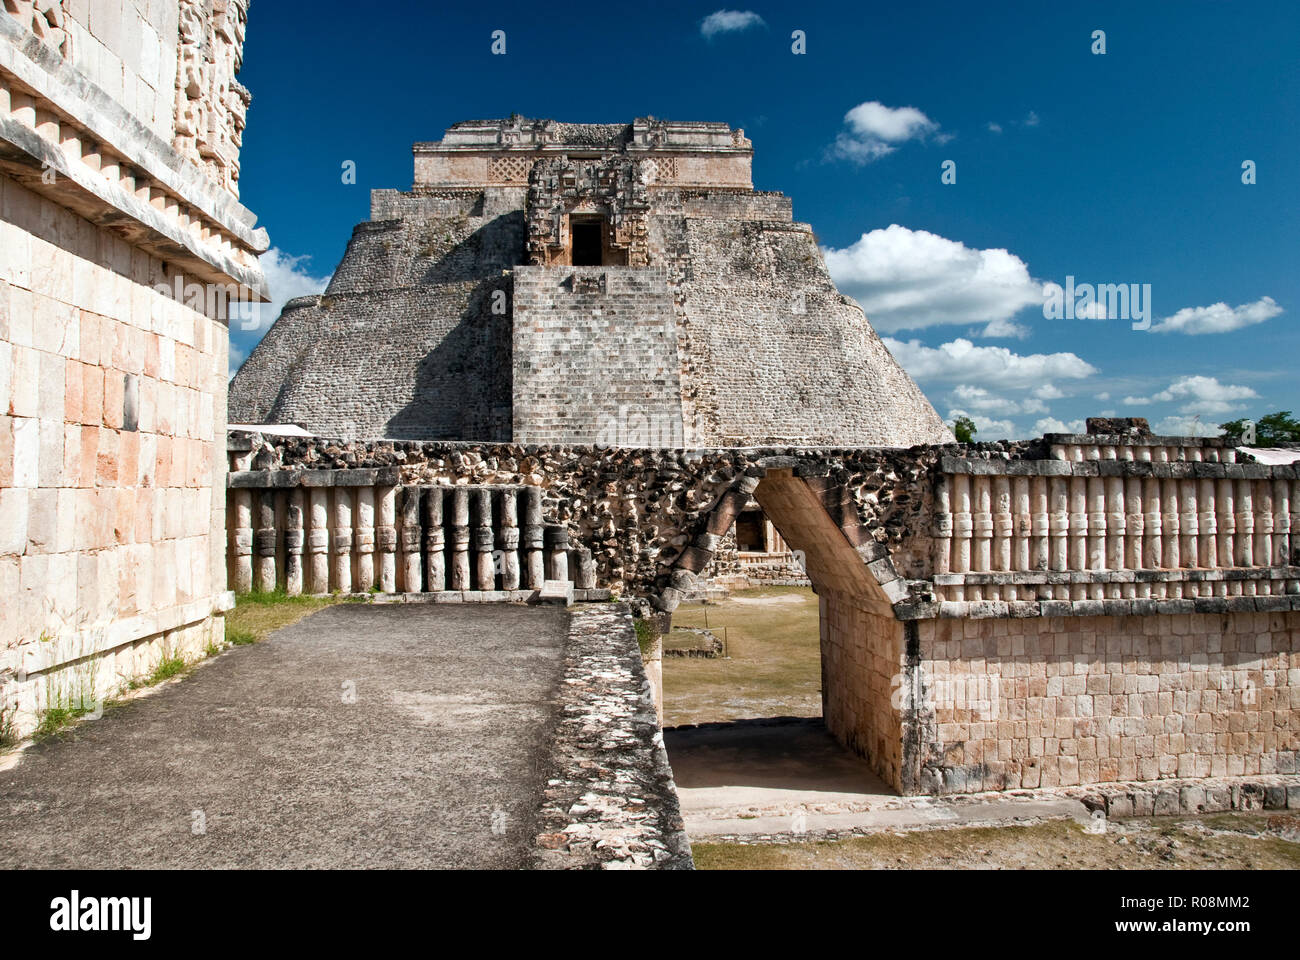 The Pyramid of the Magician (Piramide del Adivino), a Mesoamerican step pyramid in the Pre-Columbian city of Uxmal, Mexico. Stock Photo